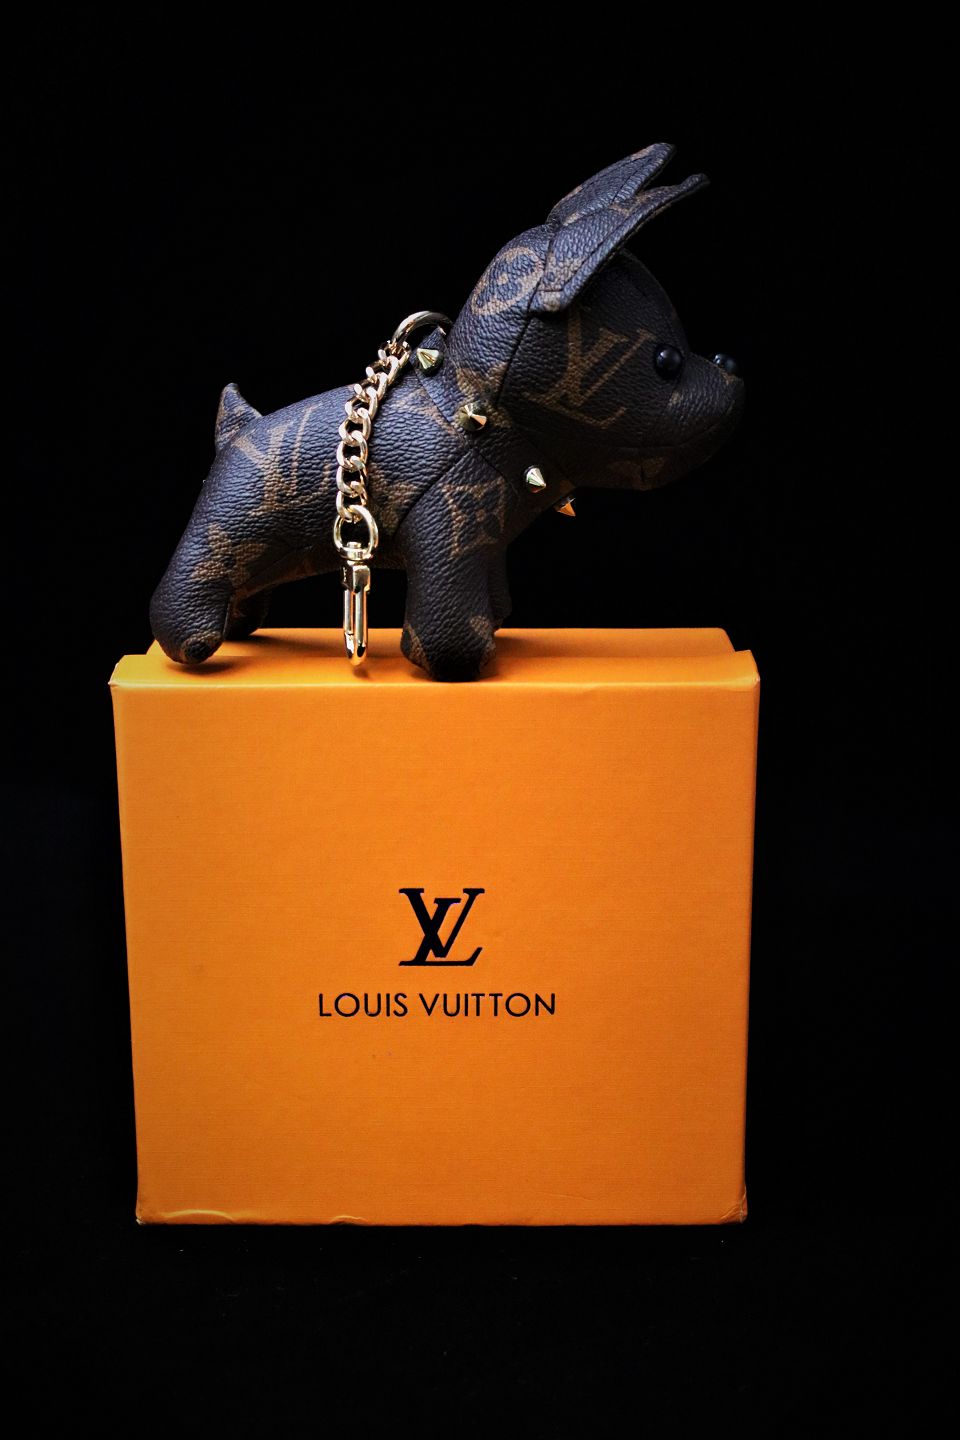 Louis Vuitton Dog 